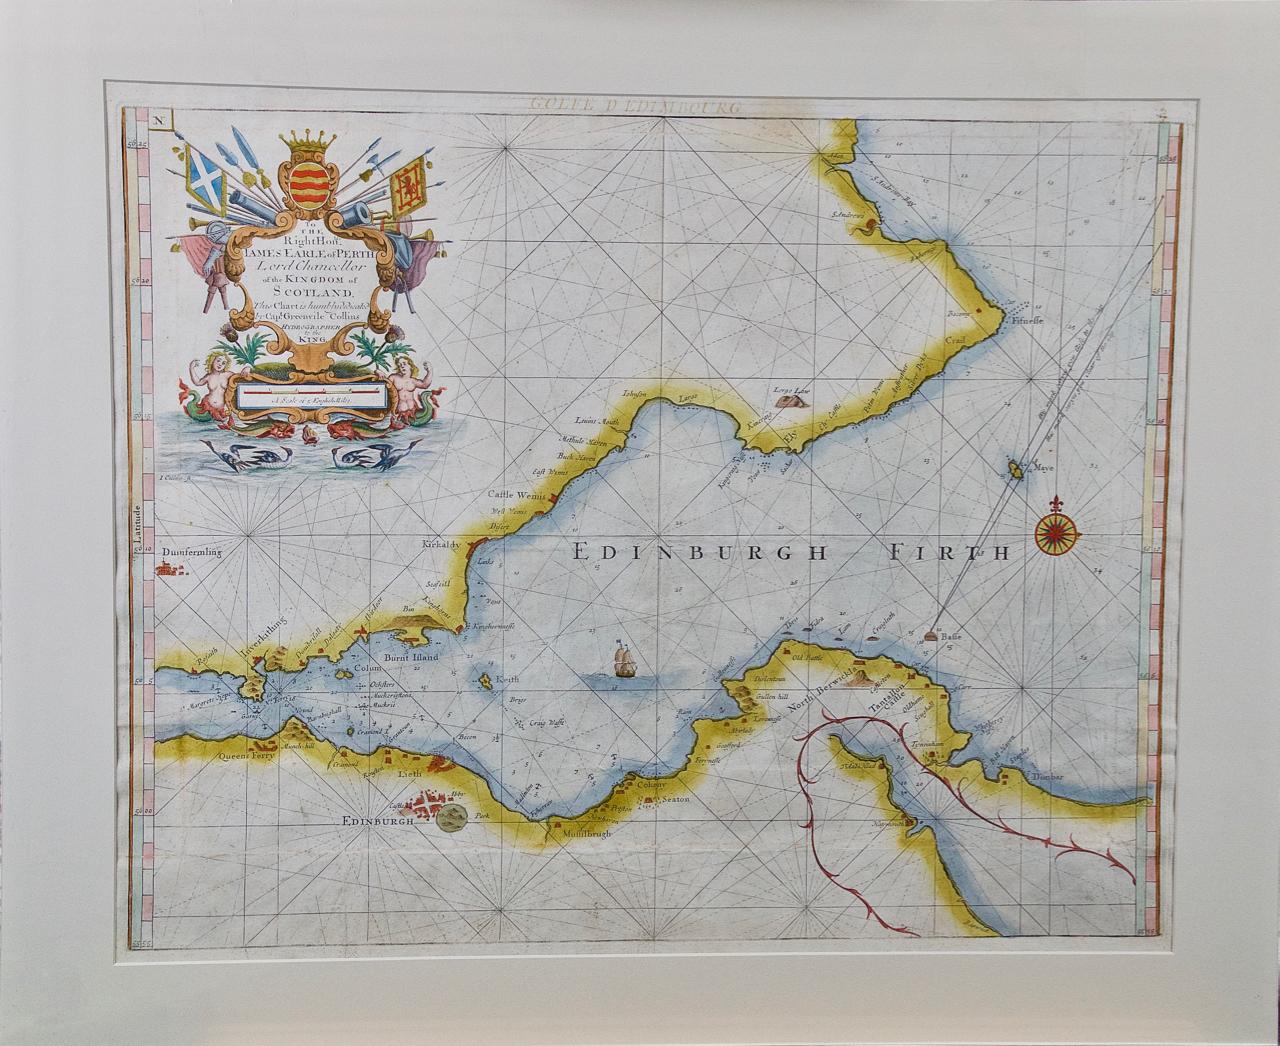 Edinburgh, Scotland: An Original 17th C. Hand-Colored Engraved Sea Chart